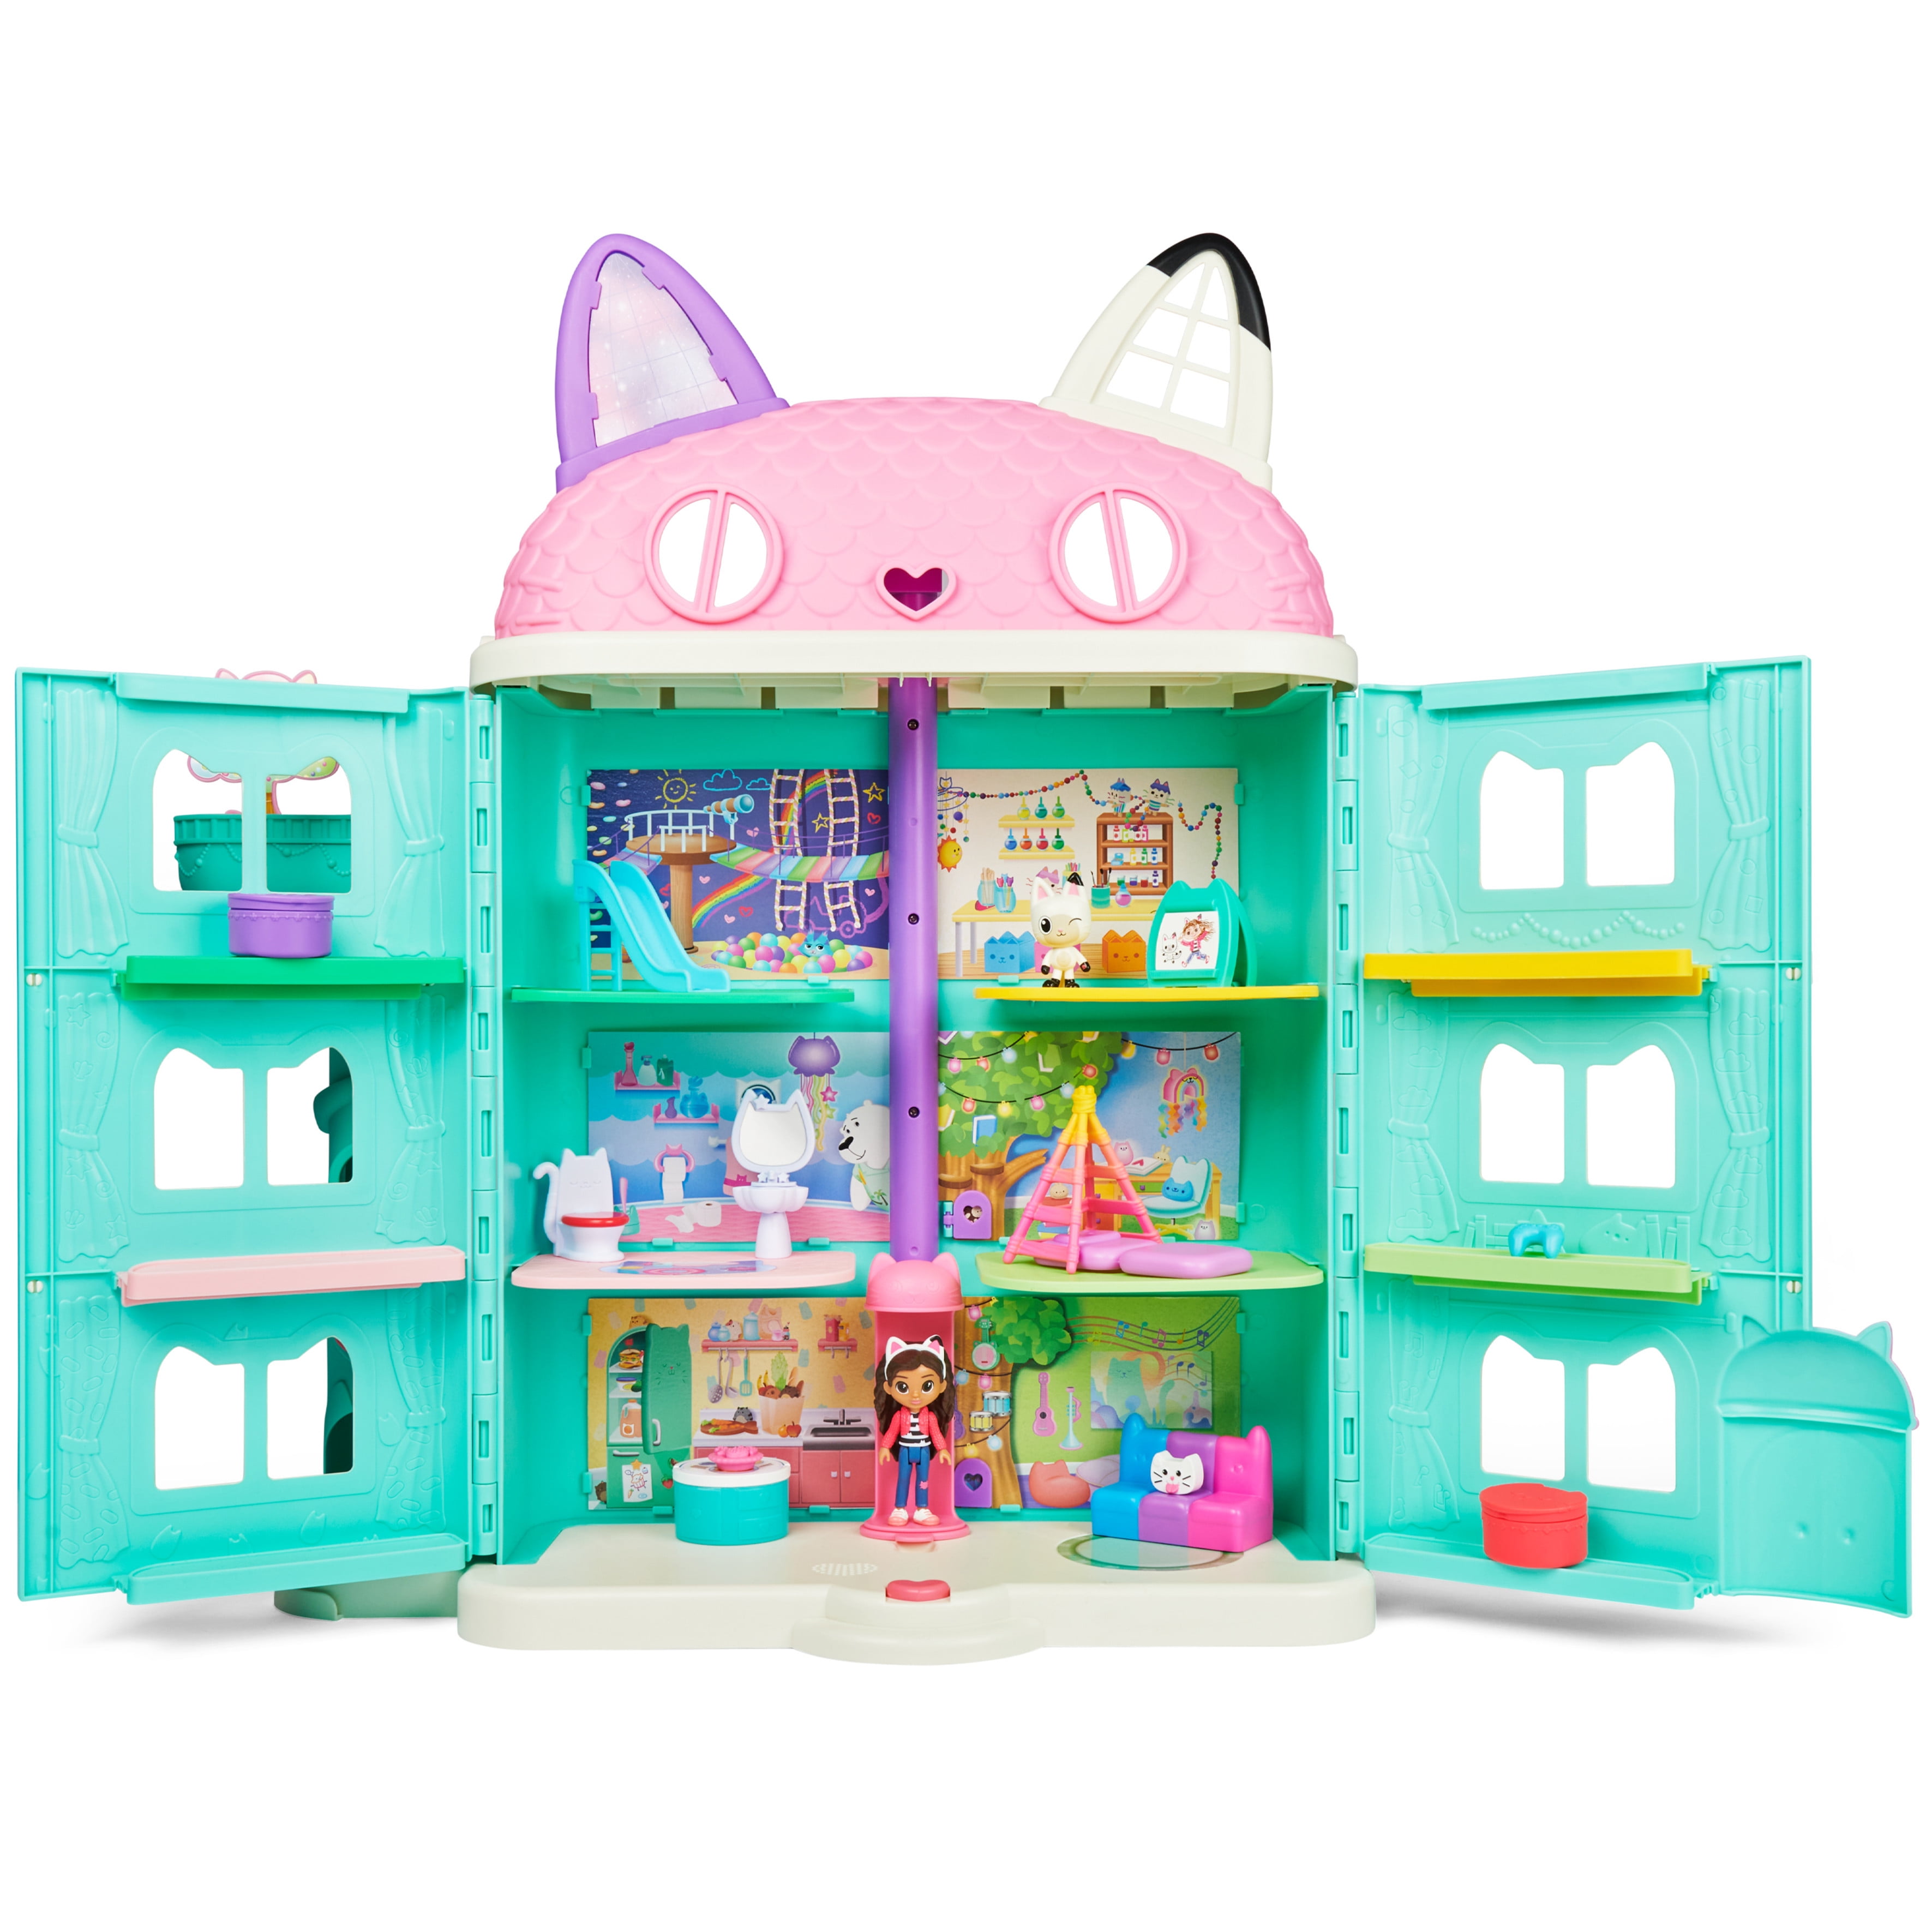 Dollhouse miniature scene model doll house accessories mini cat dog food basi ~I 